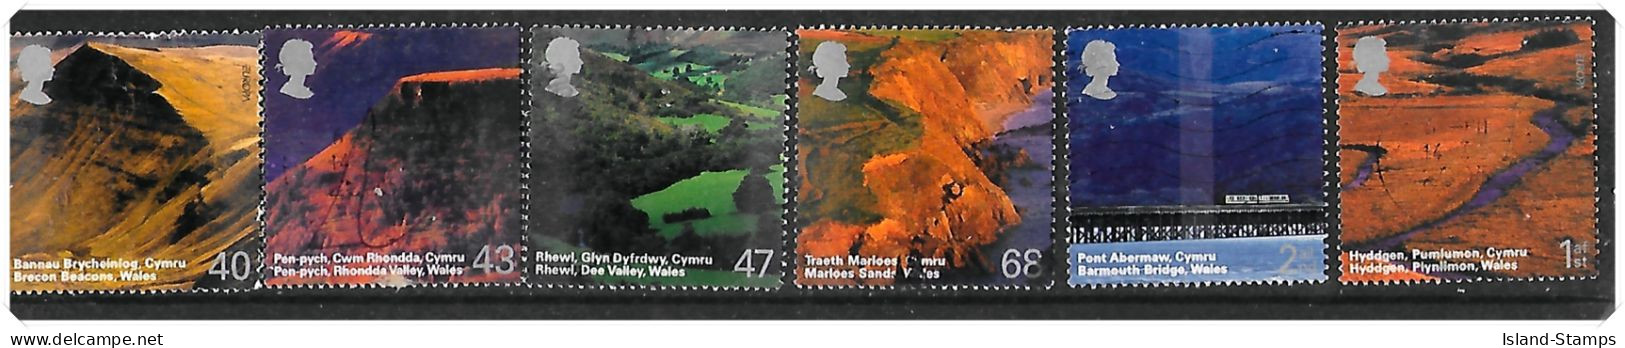 2004 British Journey Northern Ireland Used Set HRD2-C - Used Stamps